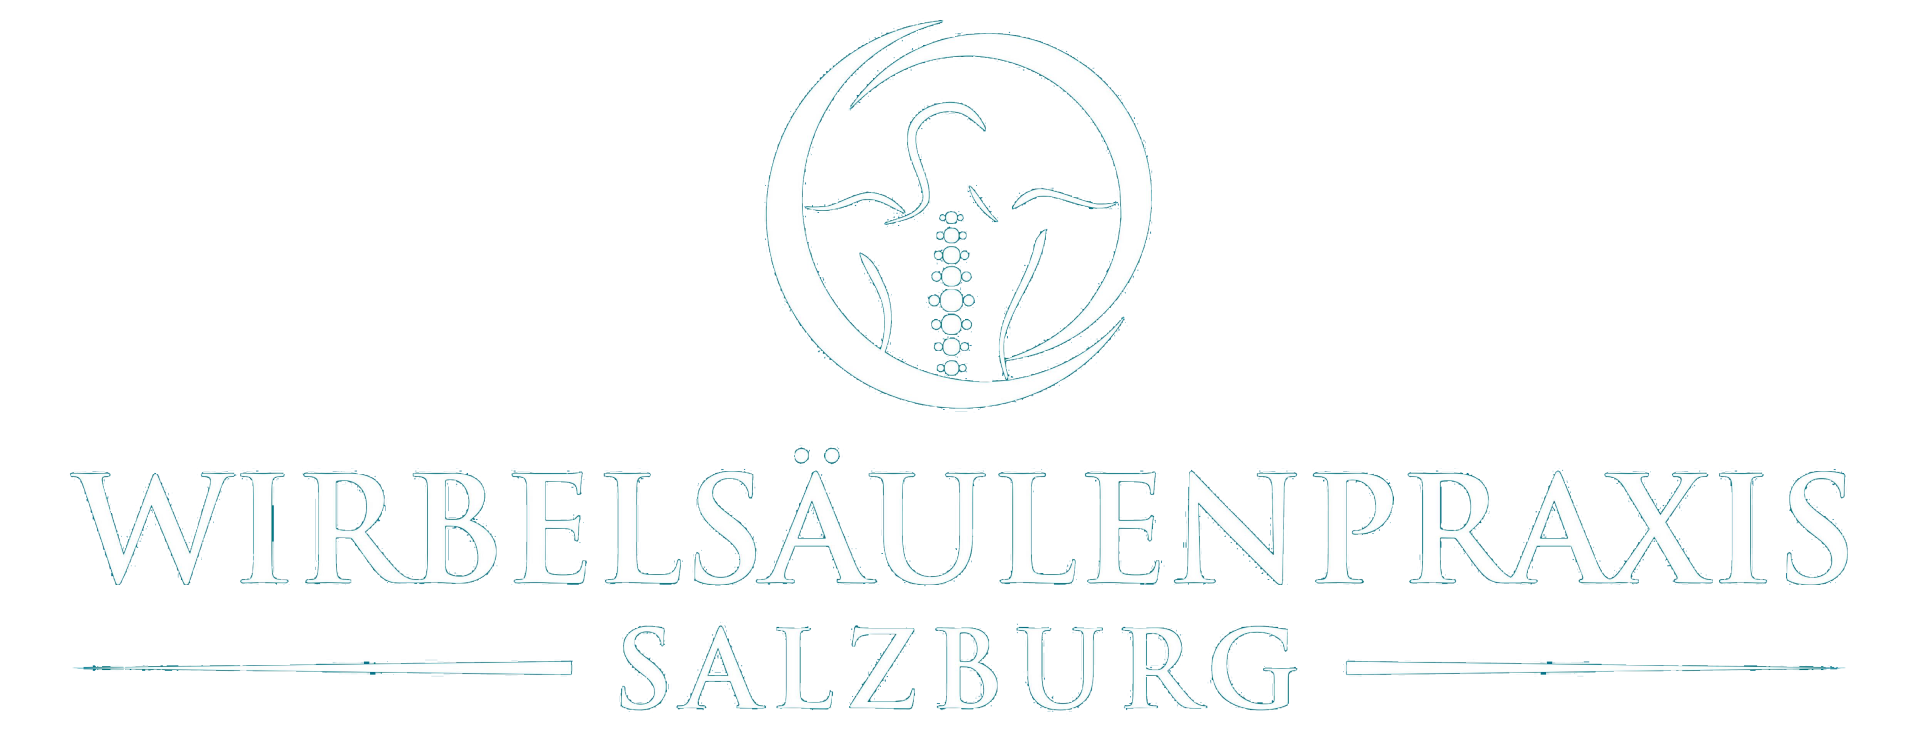 Wirbelsäulenpraxis Salzburg Logo